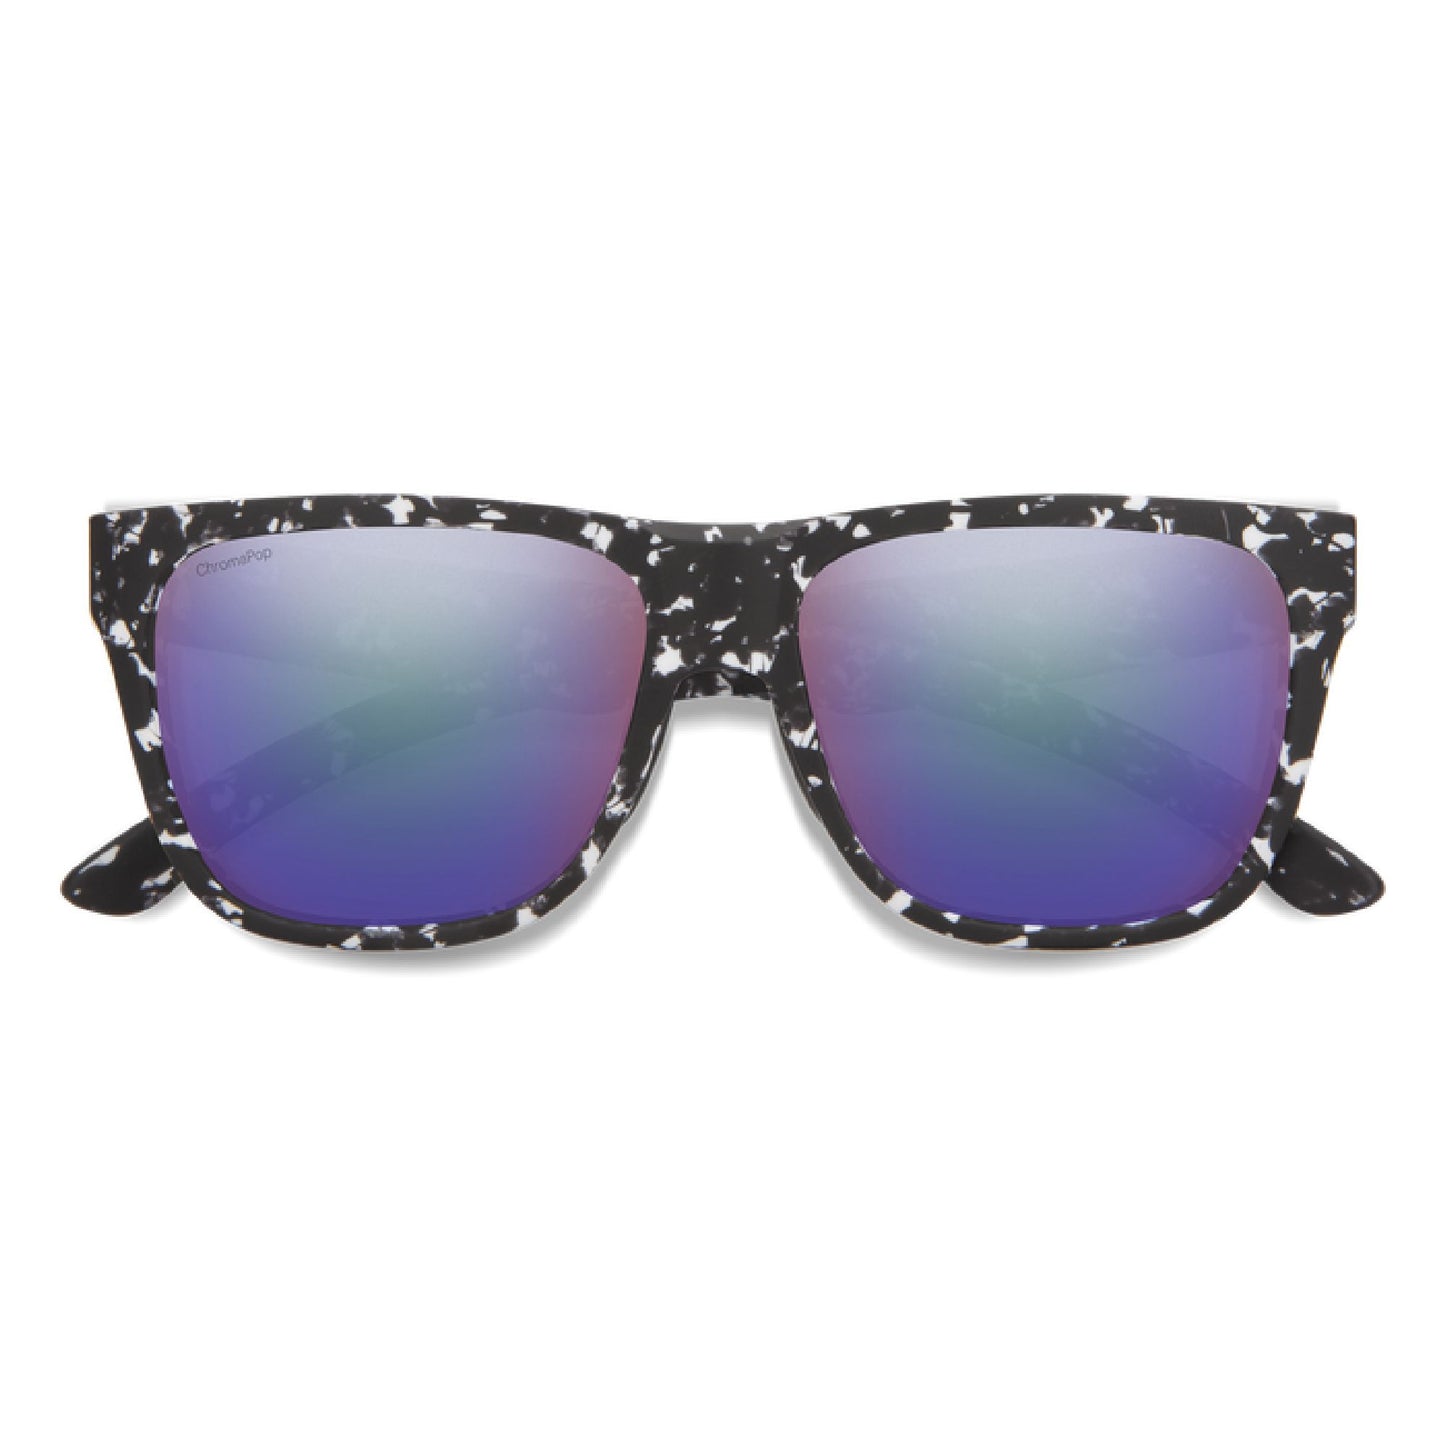 Smith Lowdown 2 Sunglasses Matte Black Marble ChromaPop Polarized Violet Mirror Lens Sunglasses